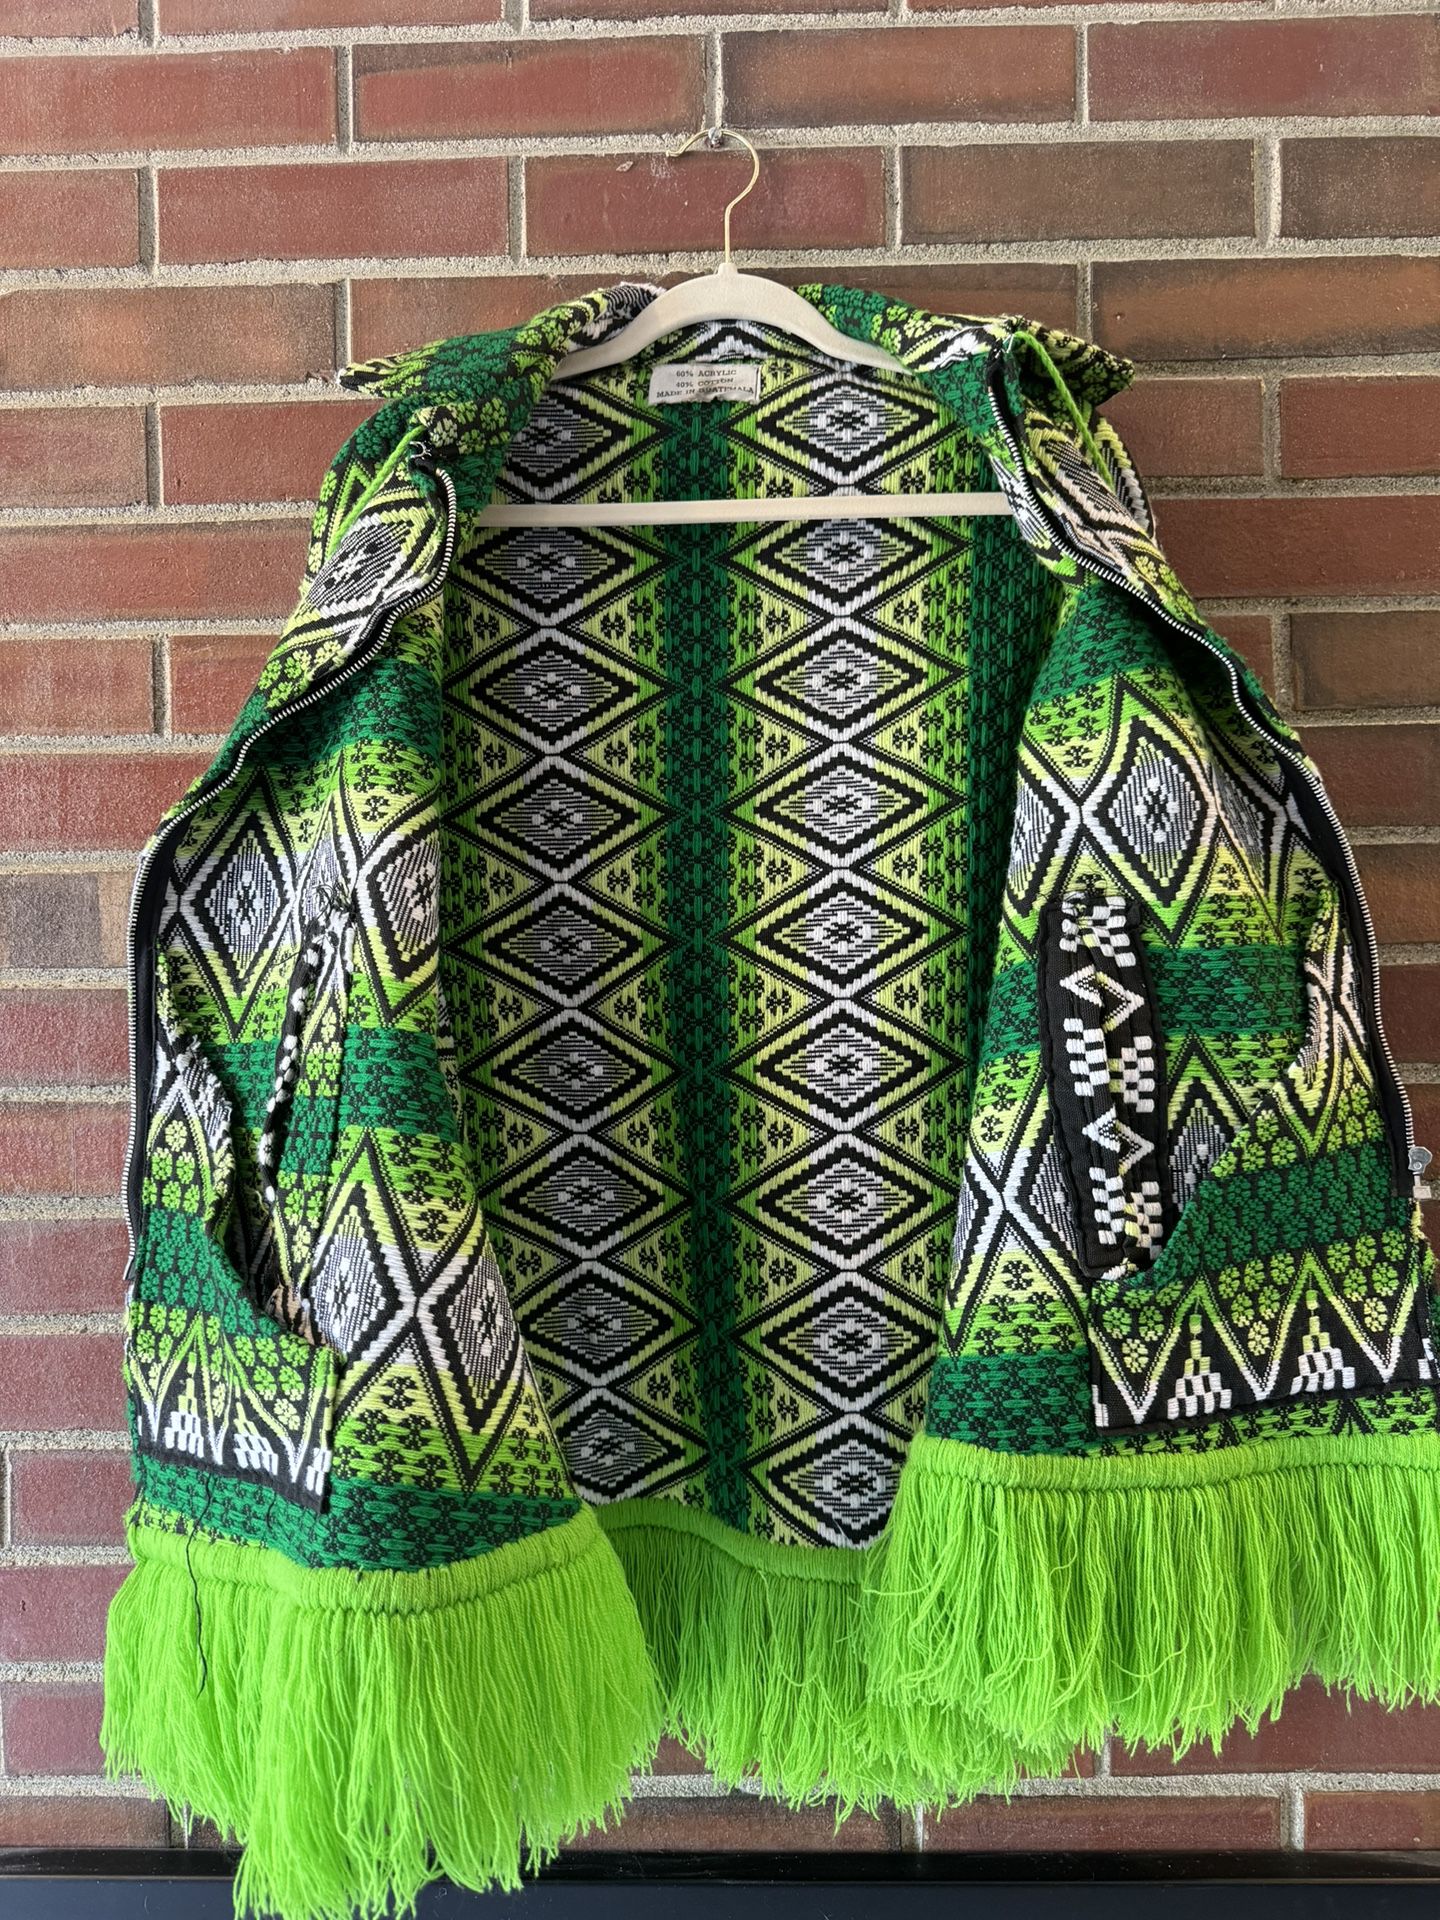 Vibrant Green Geometric Pattern Jacket (poncho) with Tassels